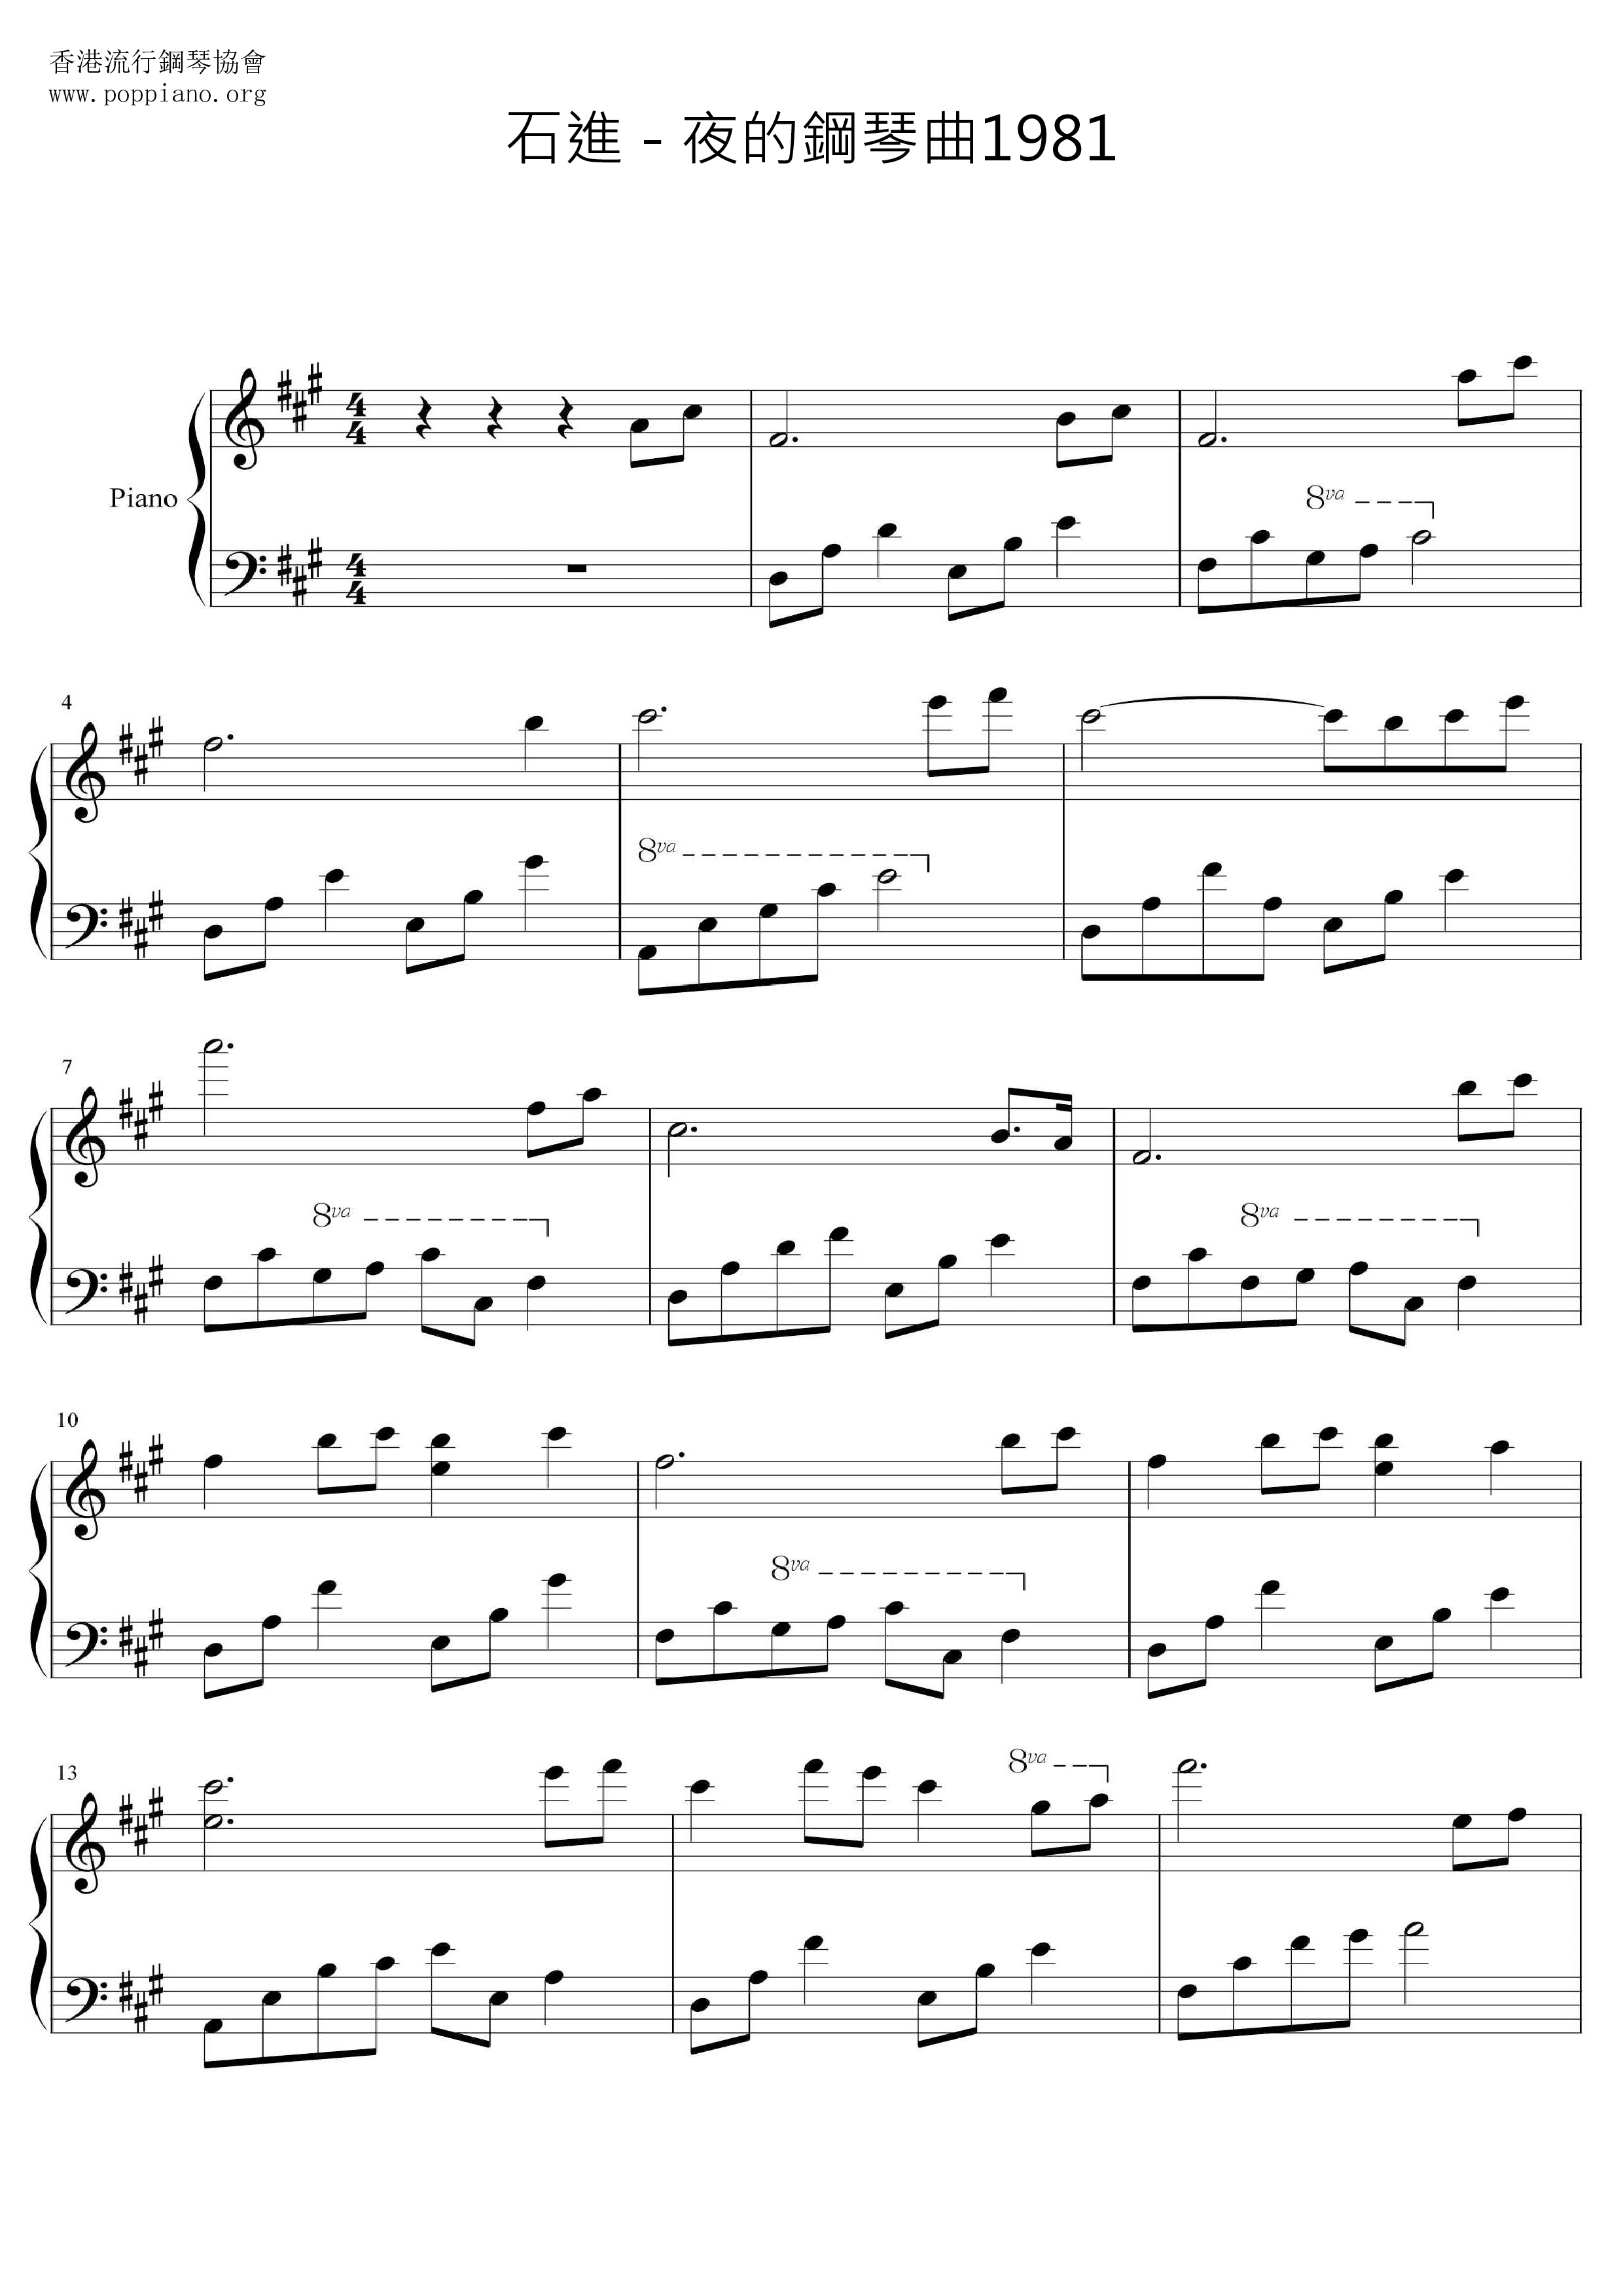 Melody Of The Night1981 Score